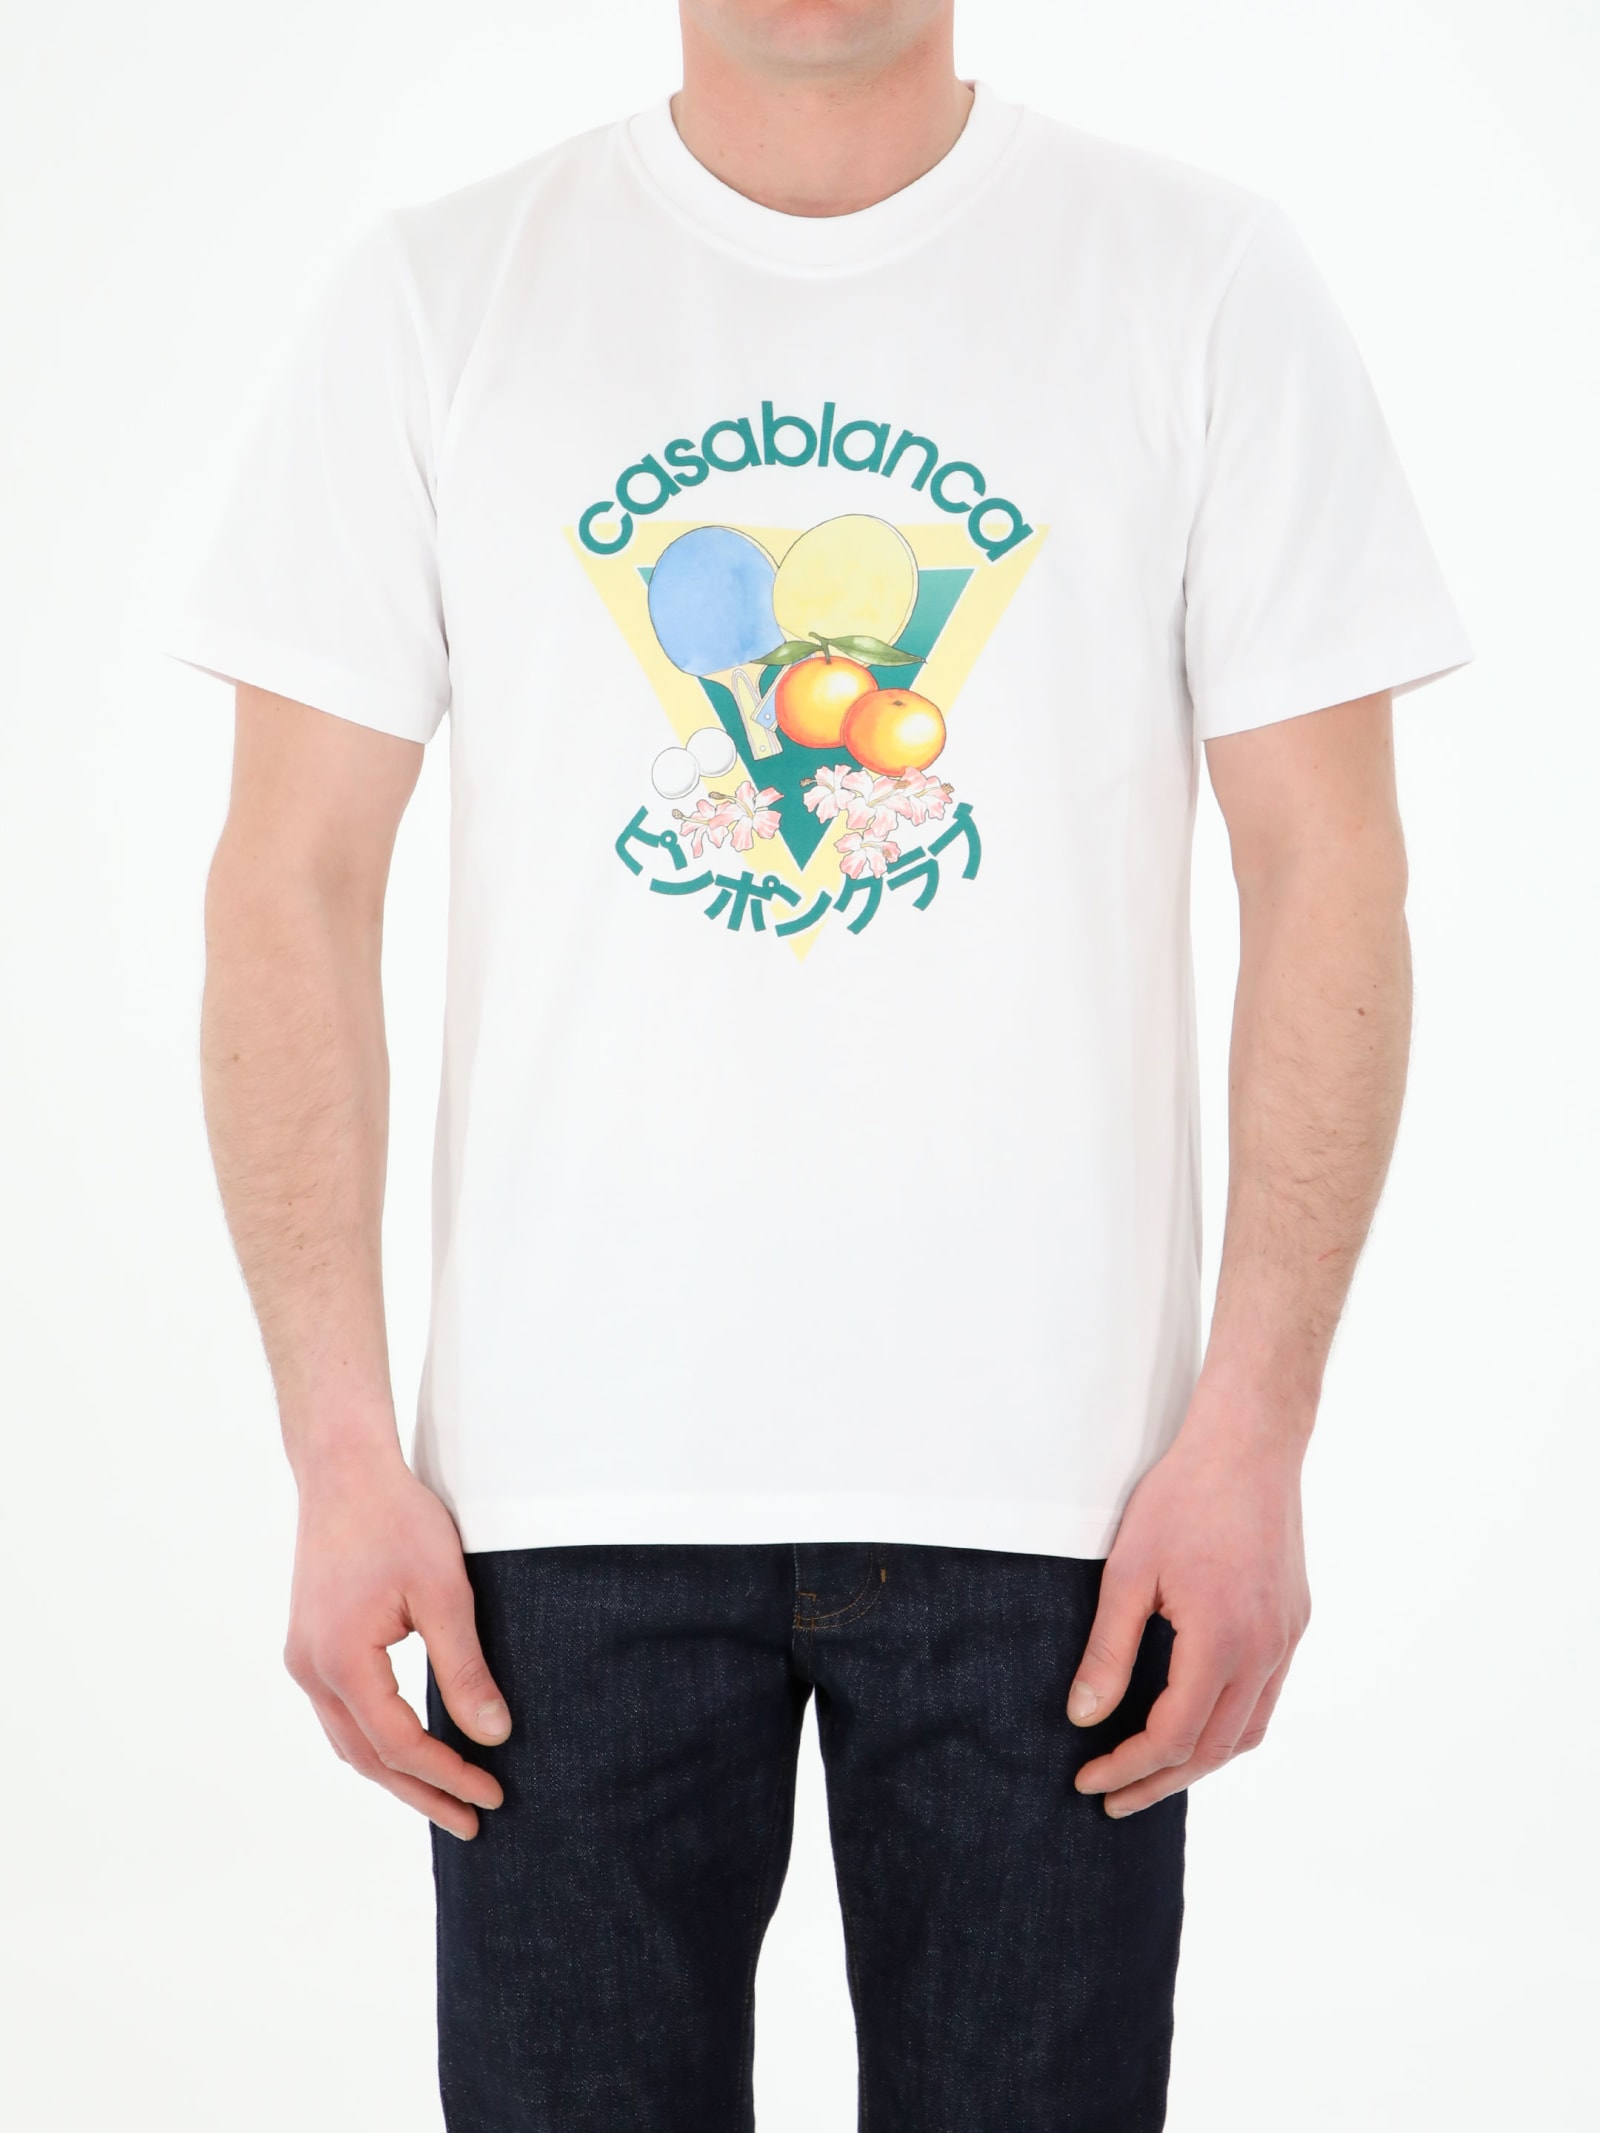 Casablanca Ping Pong Rackets T-shirt